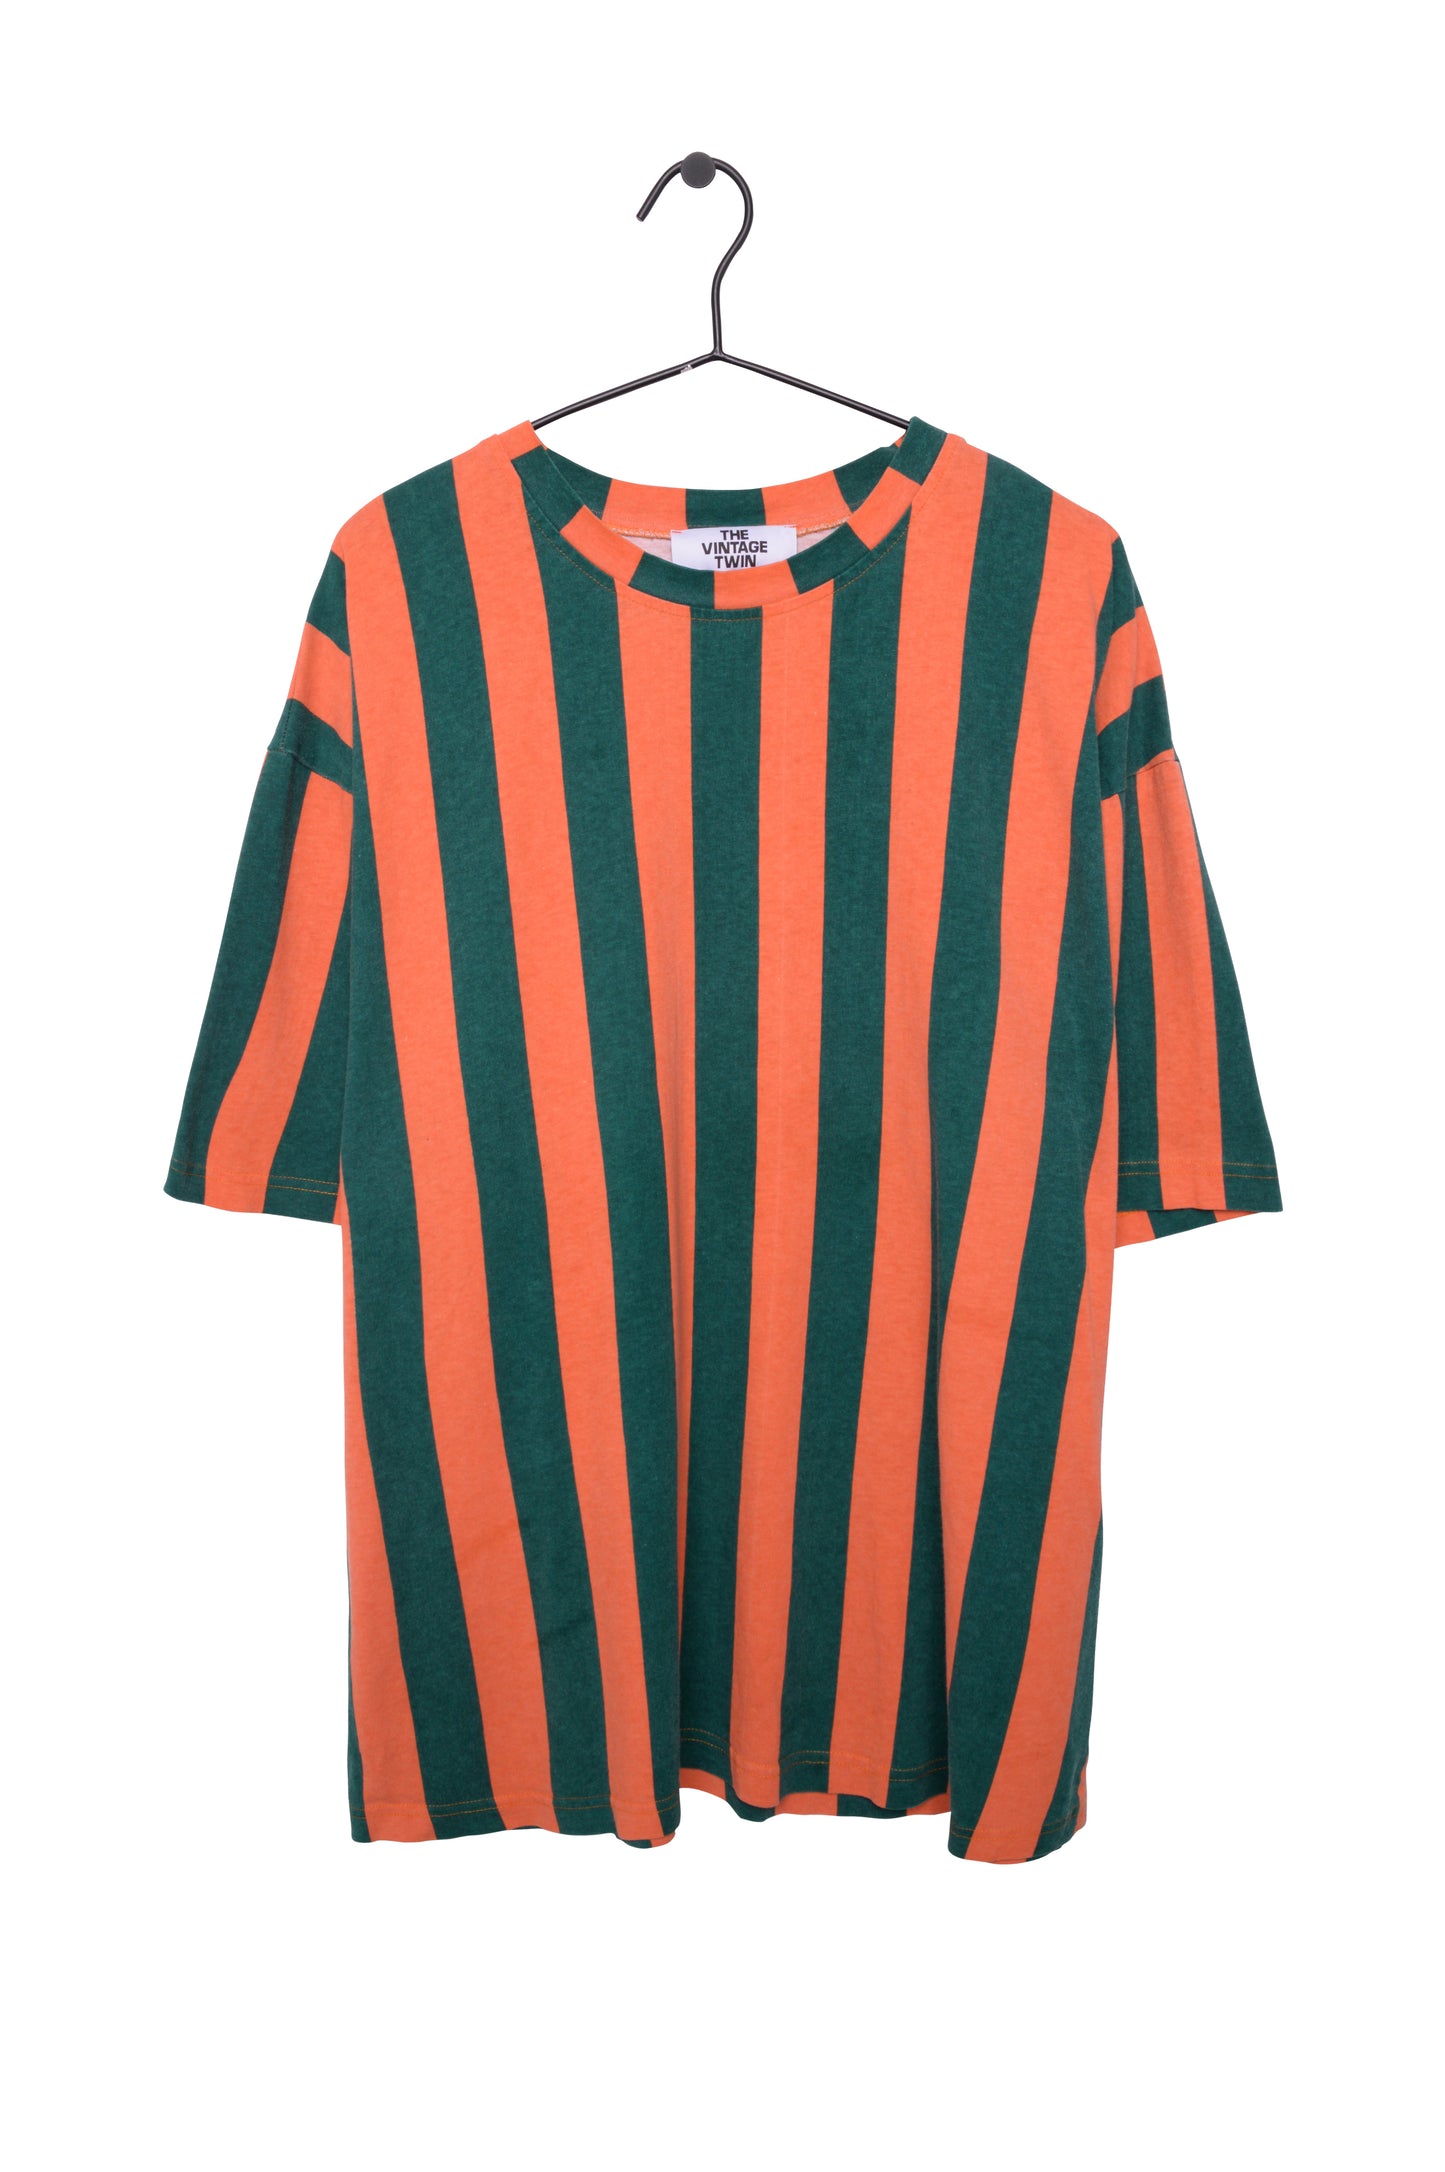 1990s Orange and Green Striped Tee USA